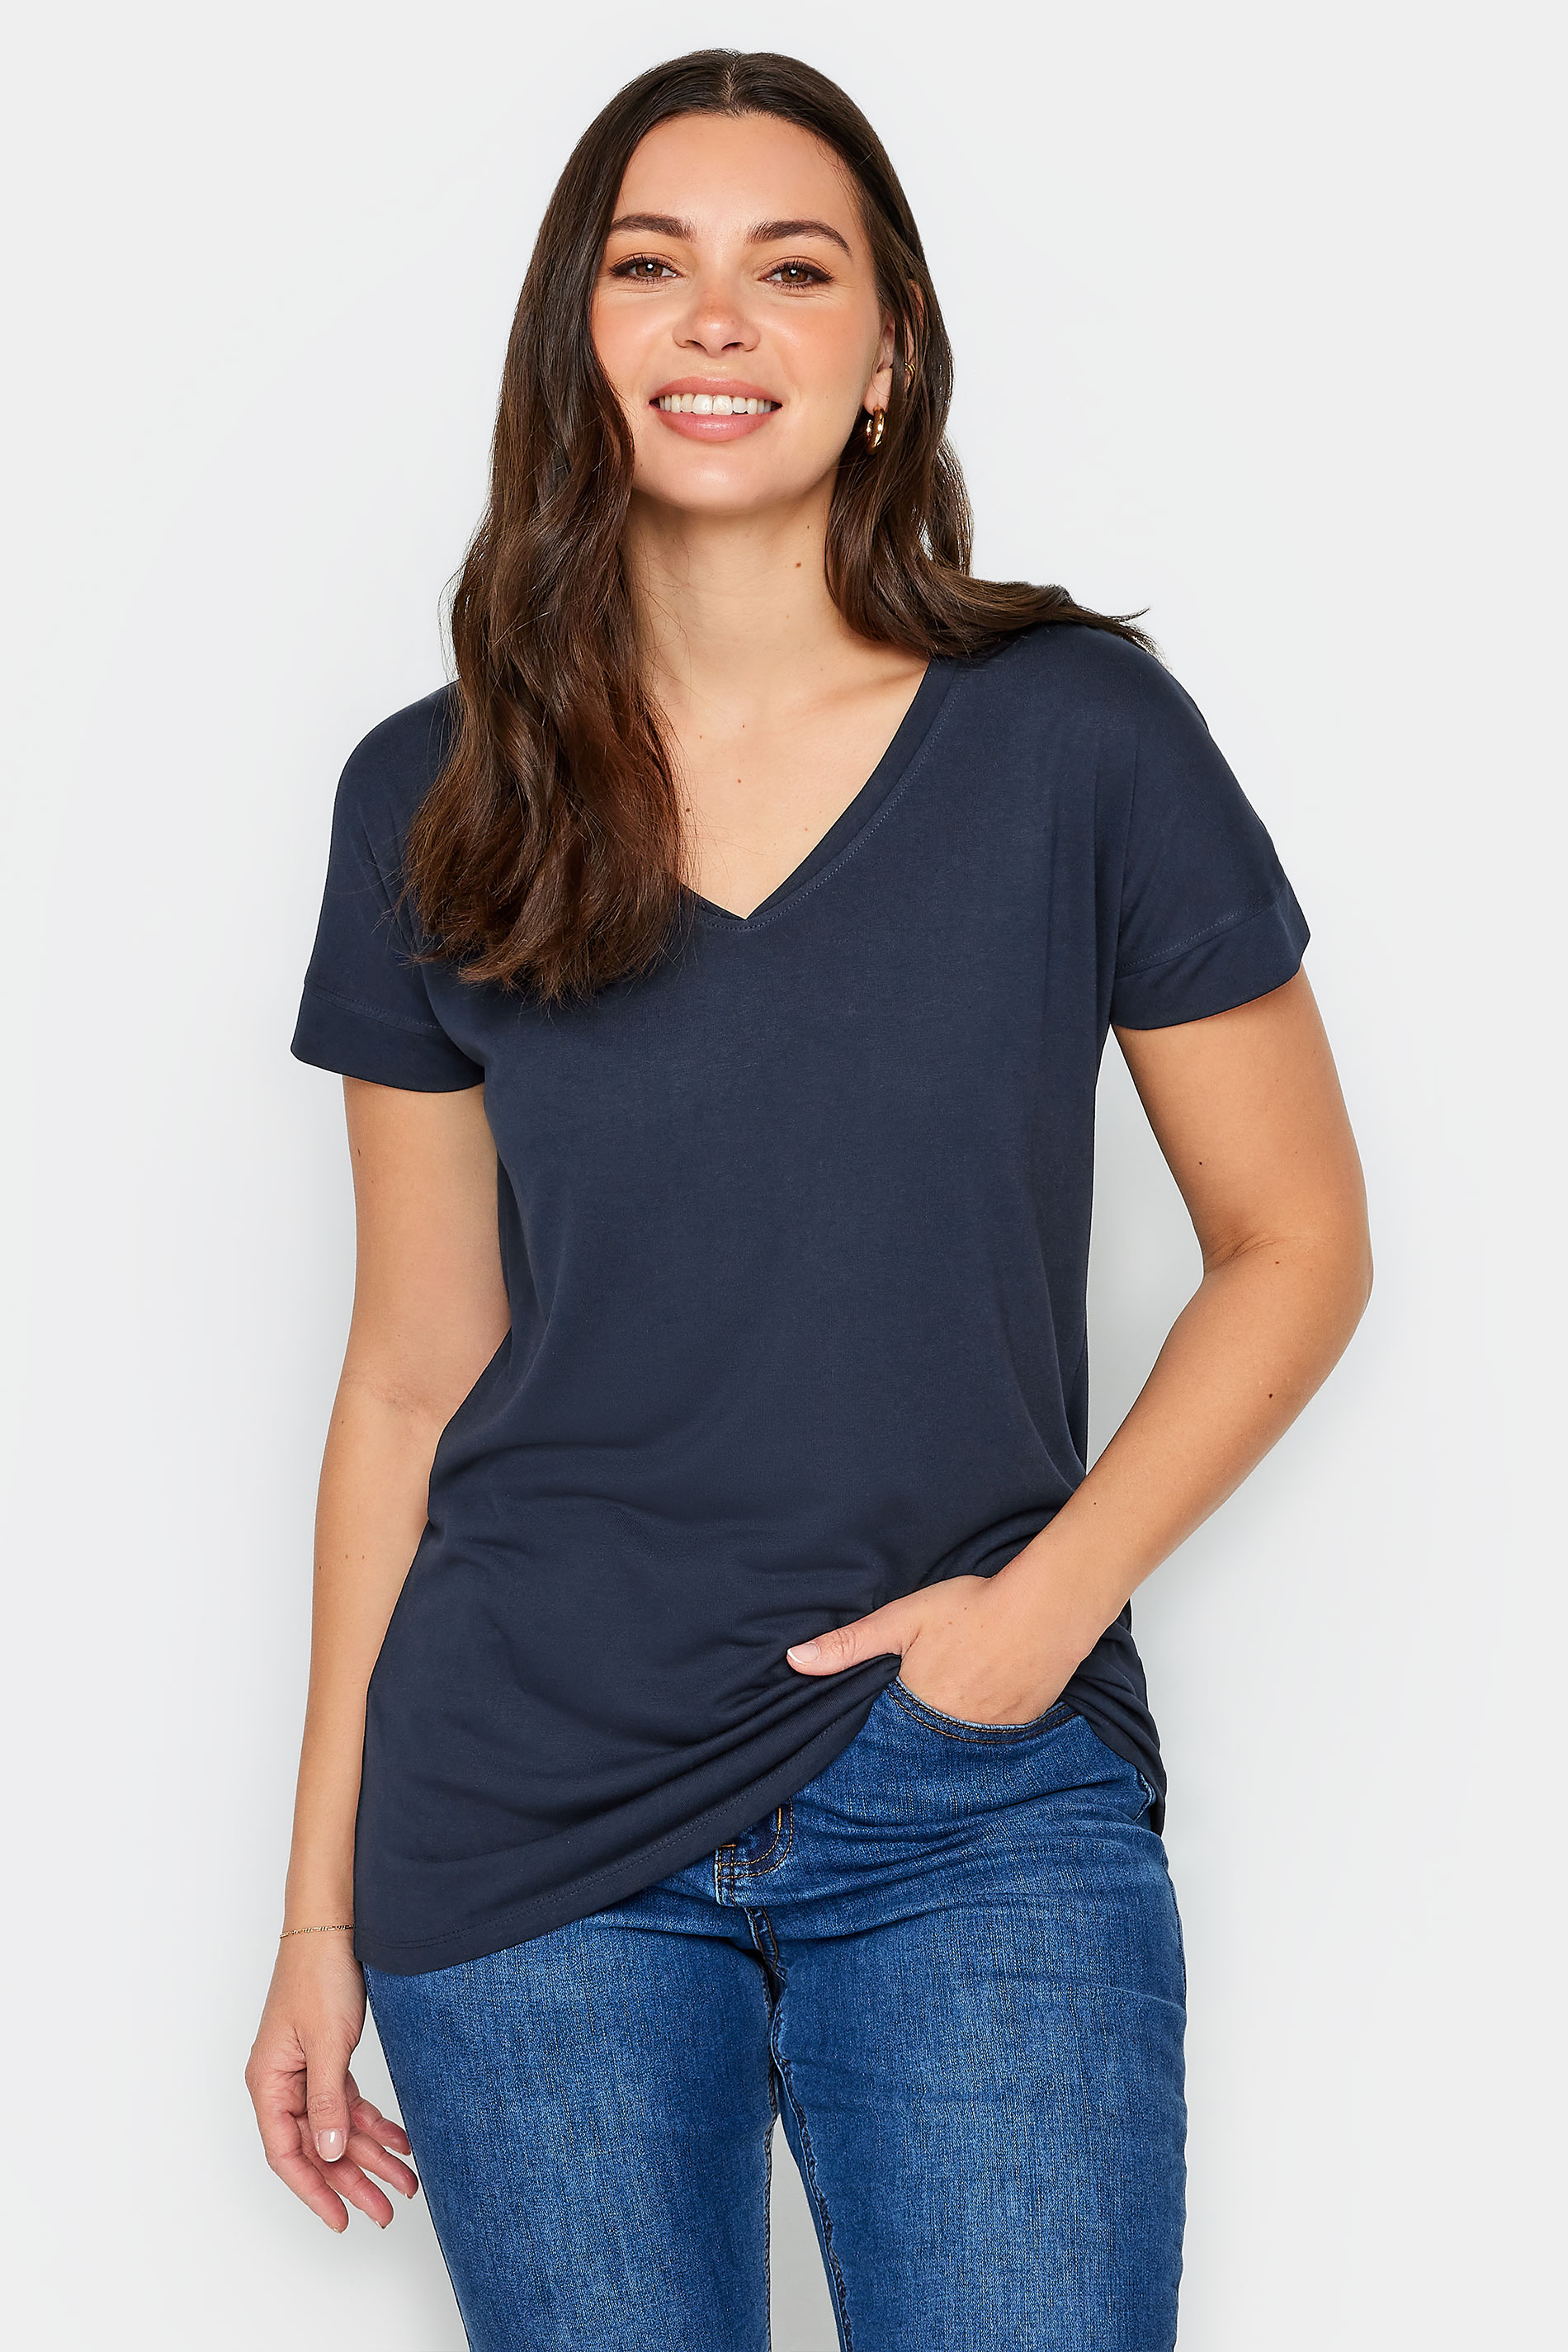 LTS PREMIUM Tall Womens Navy Blue V-Neck T-Shirt | Long Tall Sally 1